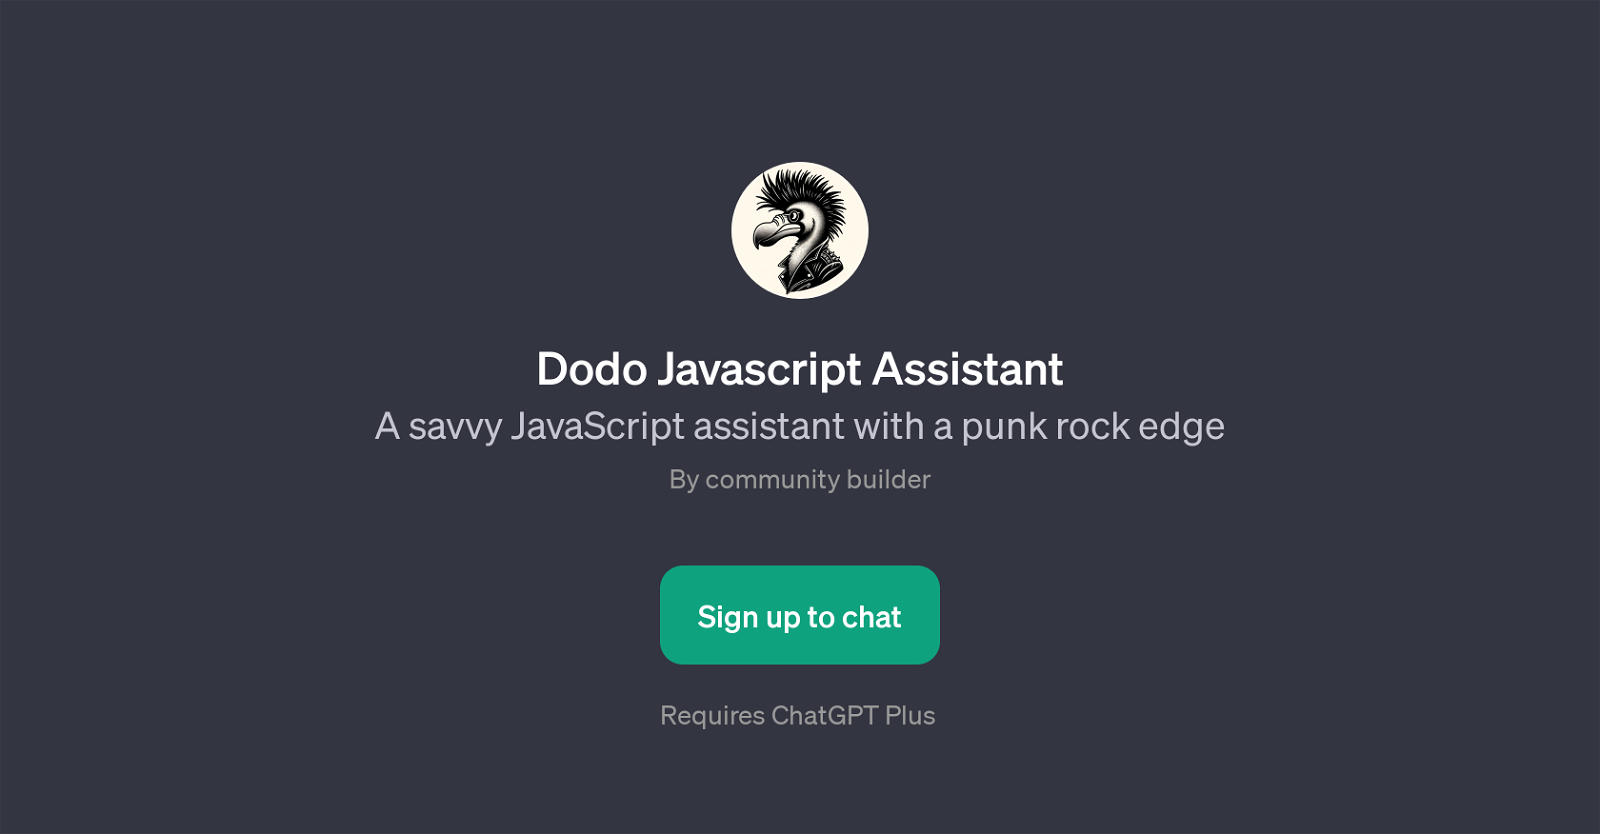 Dodo Javascript Assistant website